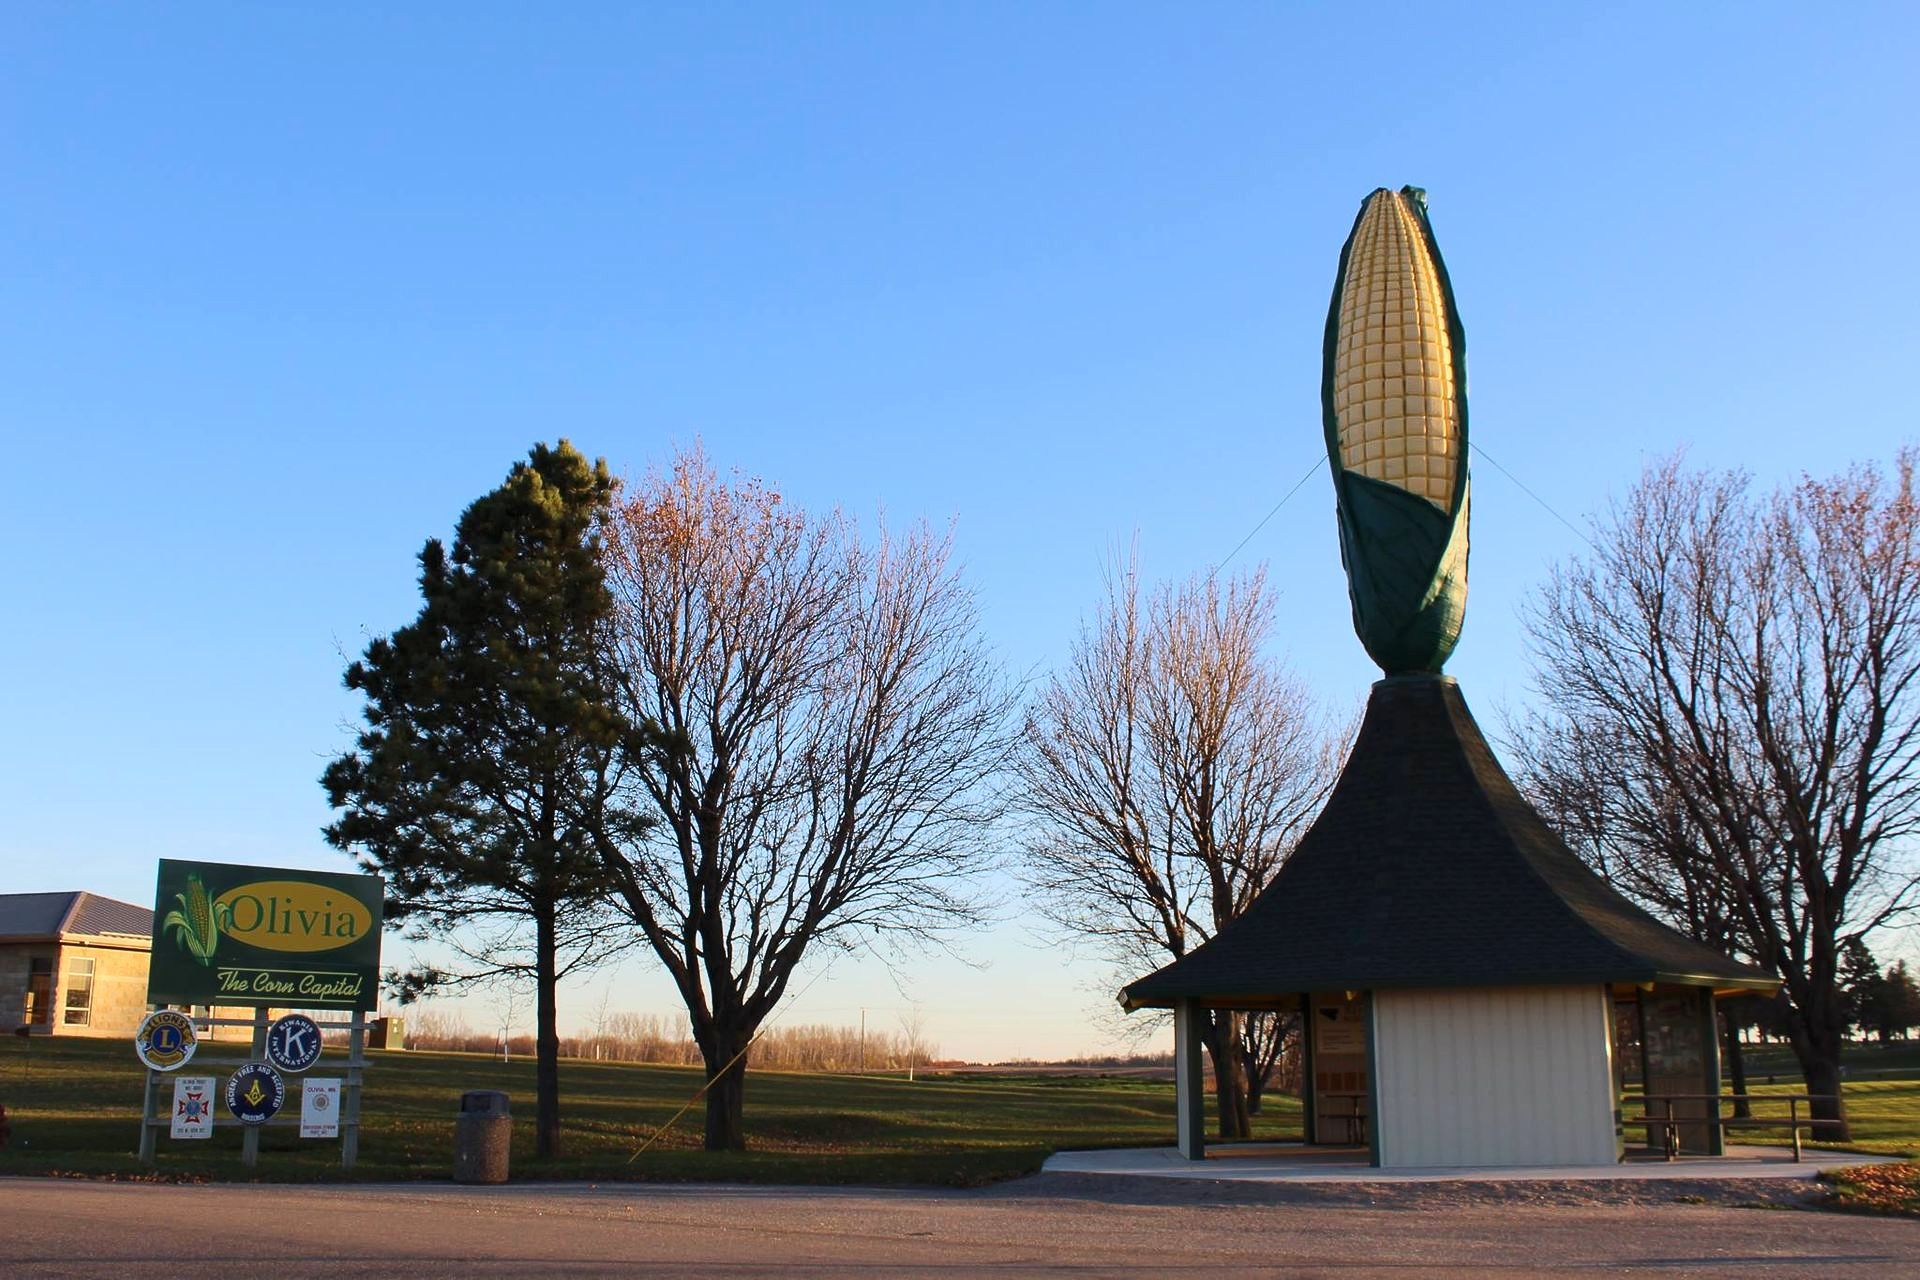 
World's Largest Ear of Corn, world record in Olivia, Minnesota
